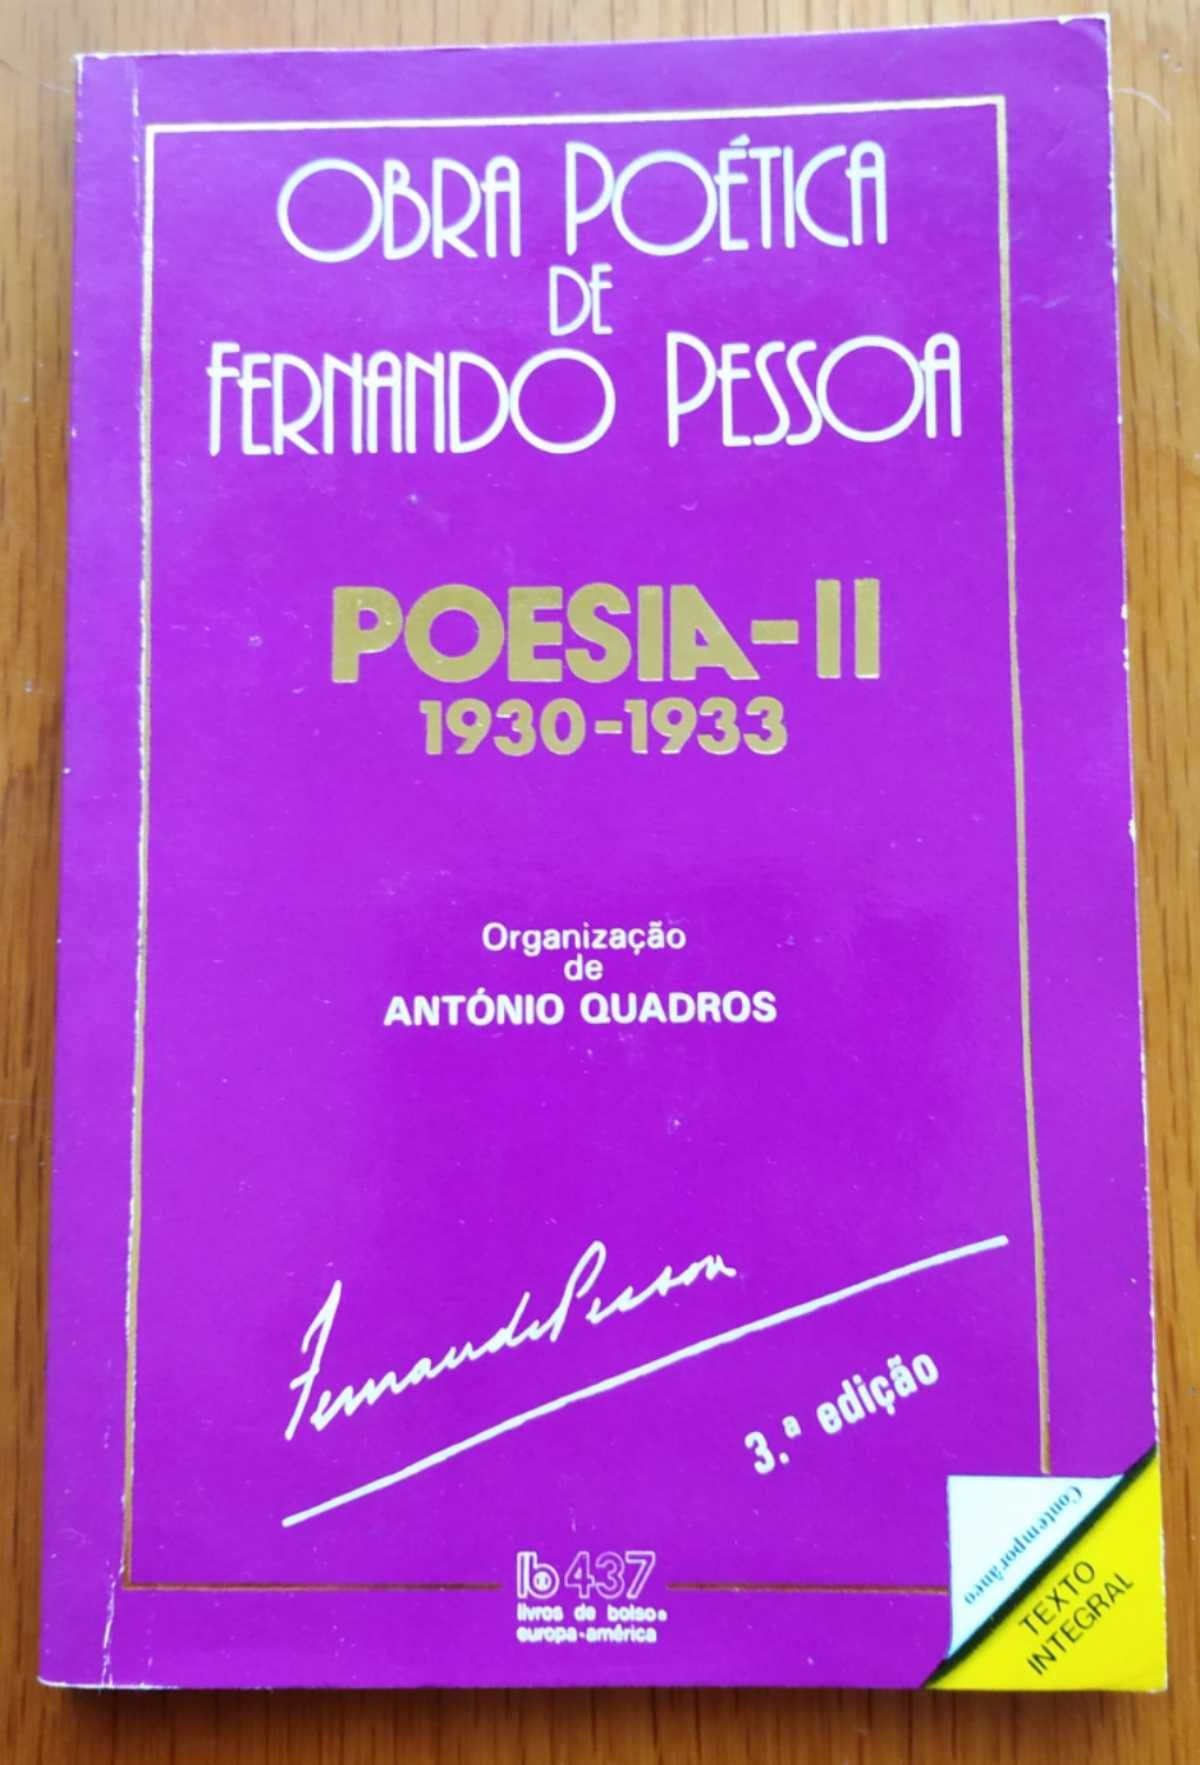 Fernando Pessoa - Poesia - II